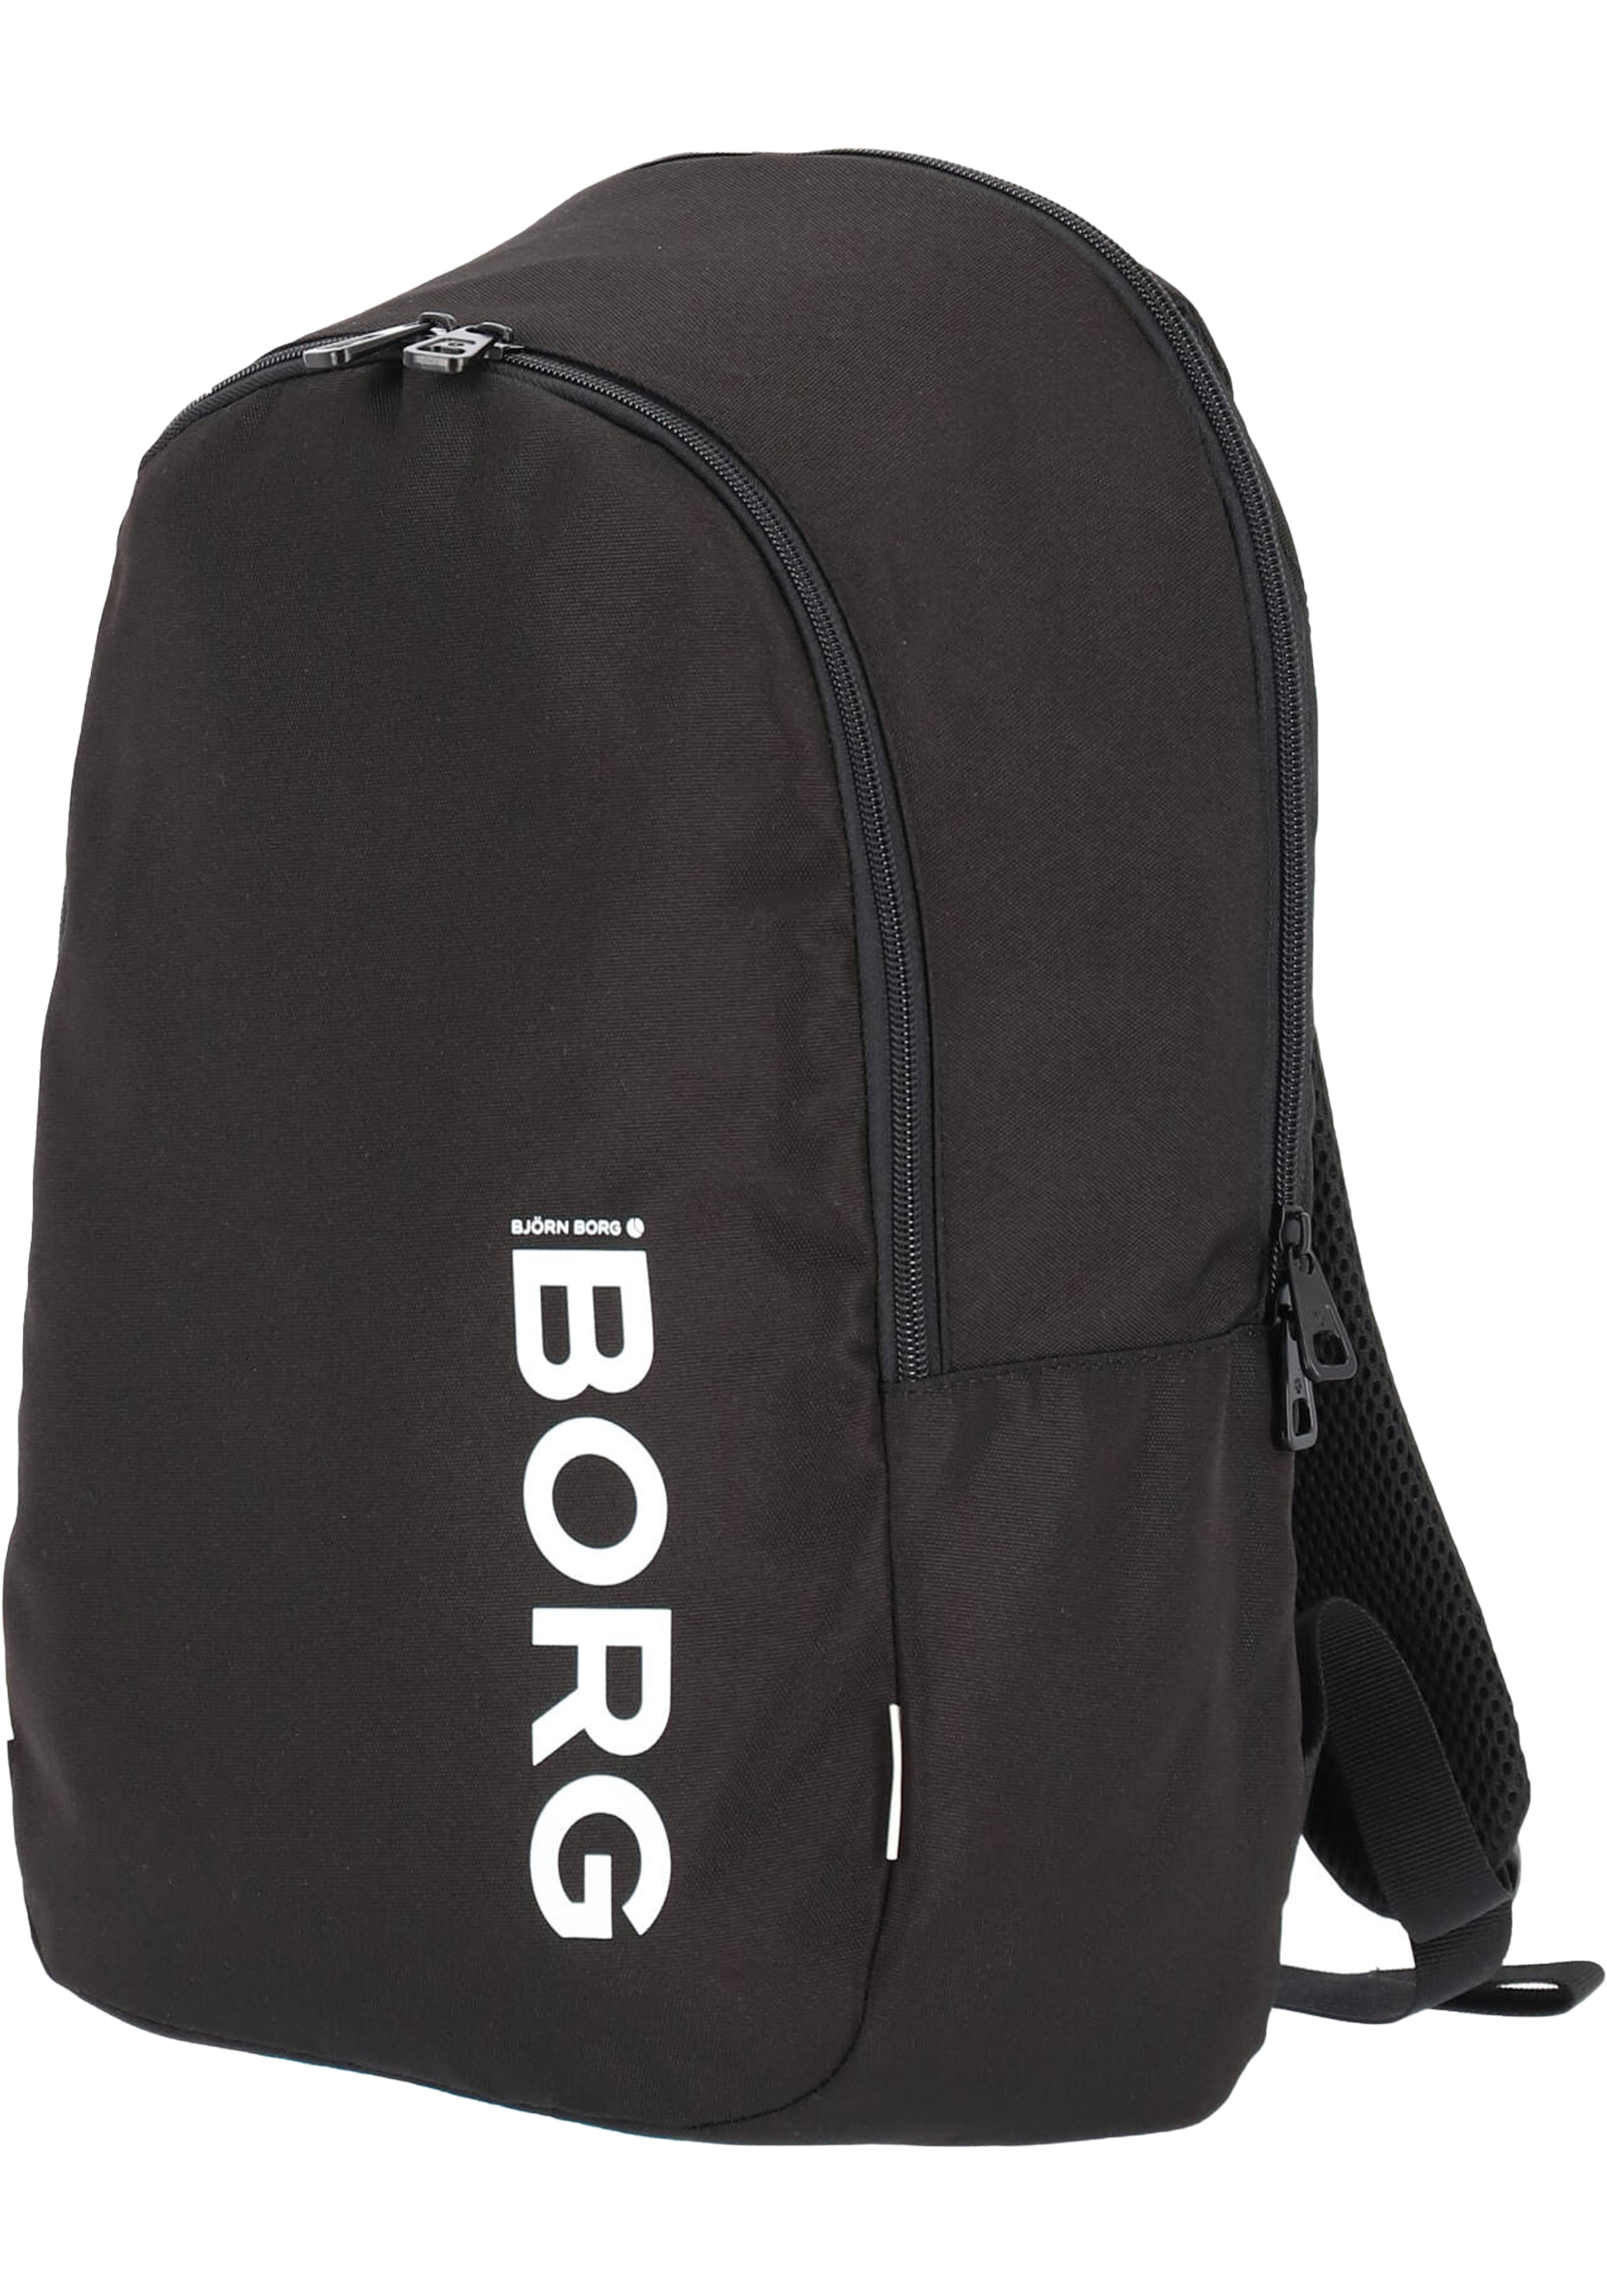 Bjorn Borg Core backpack, unisex rugzak, zwart